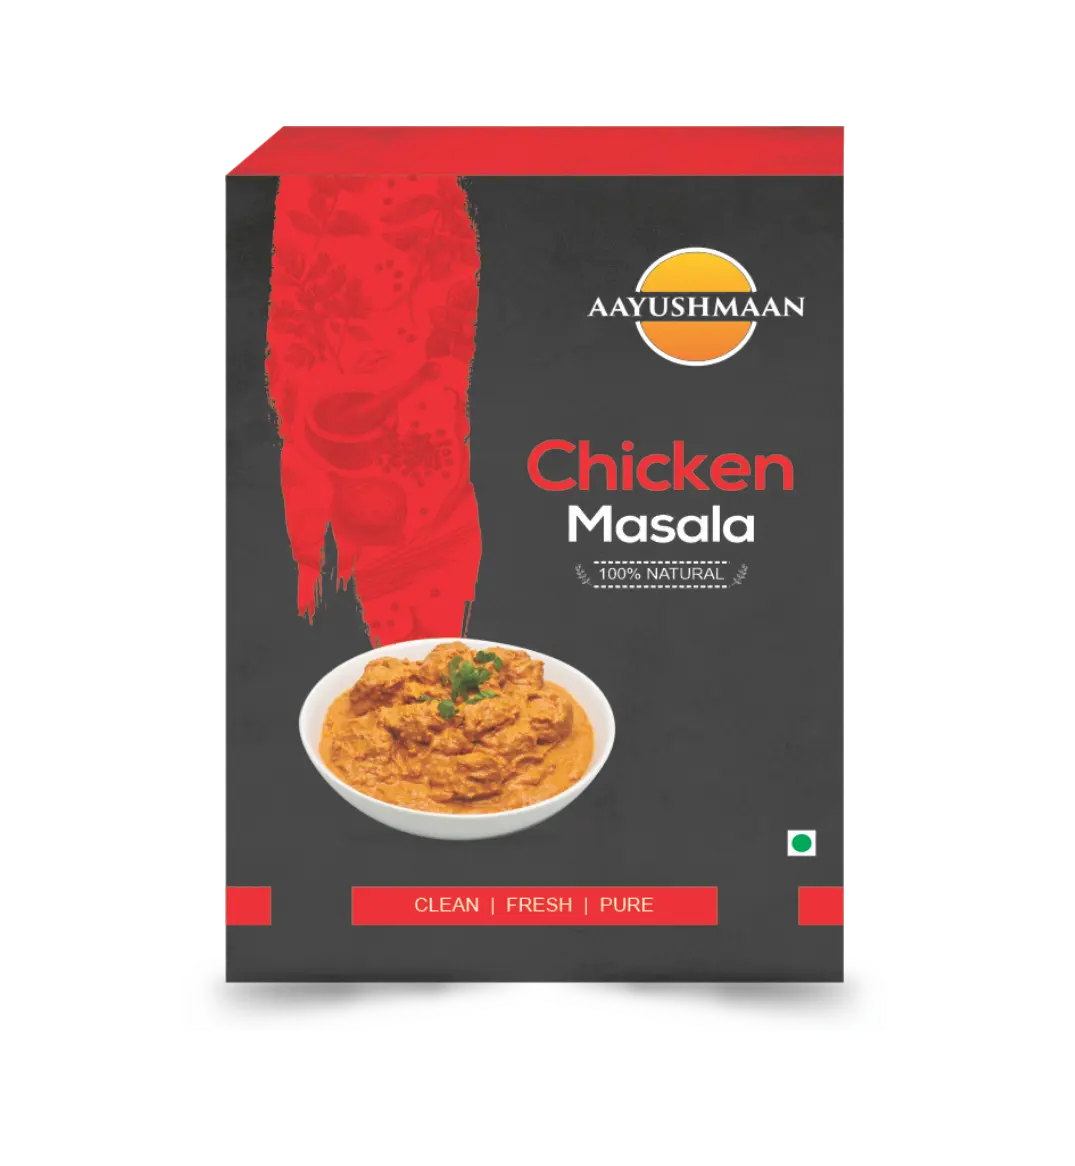 Aayushmaan Chicken Masala- spice up your chicken